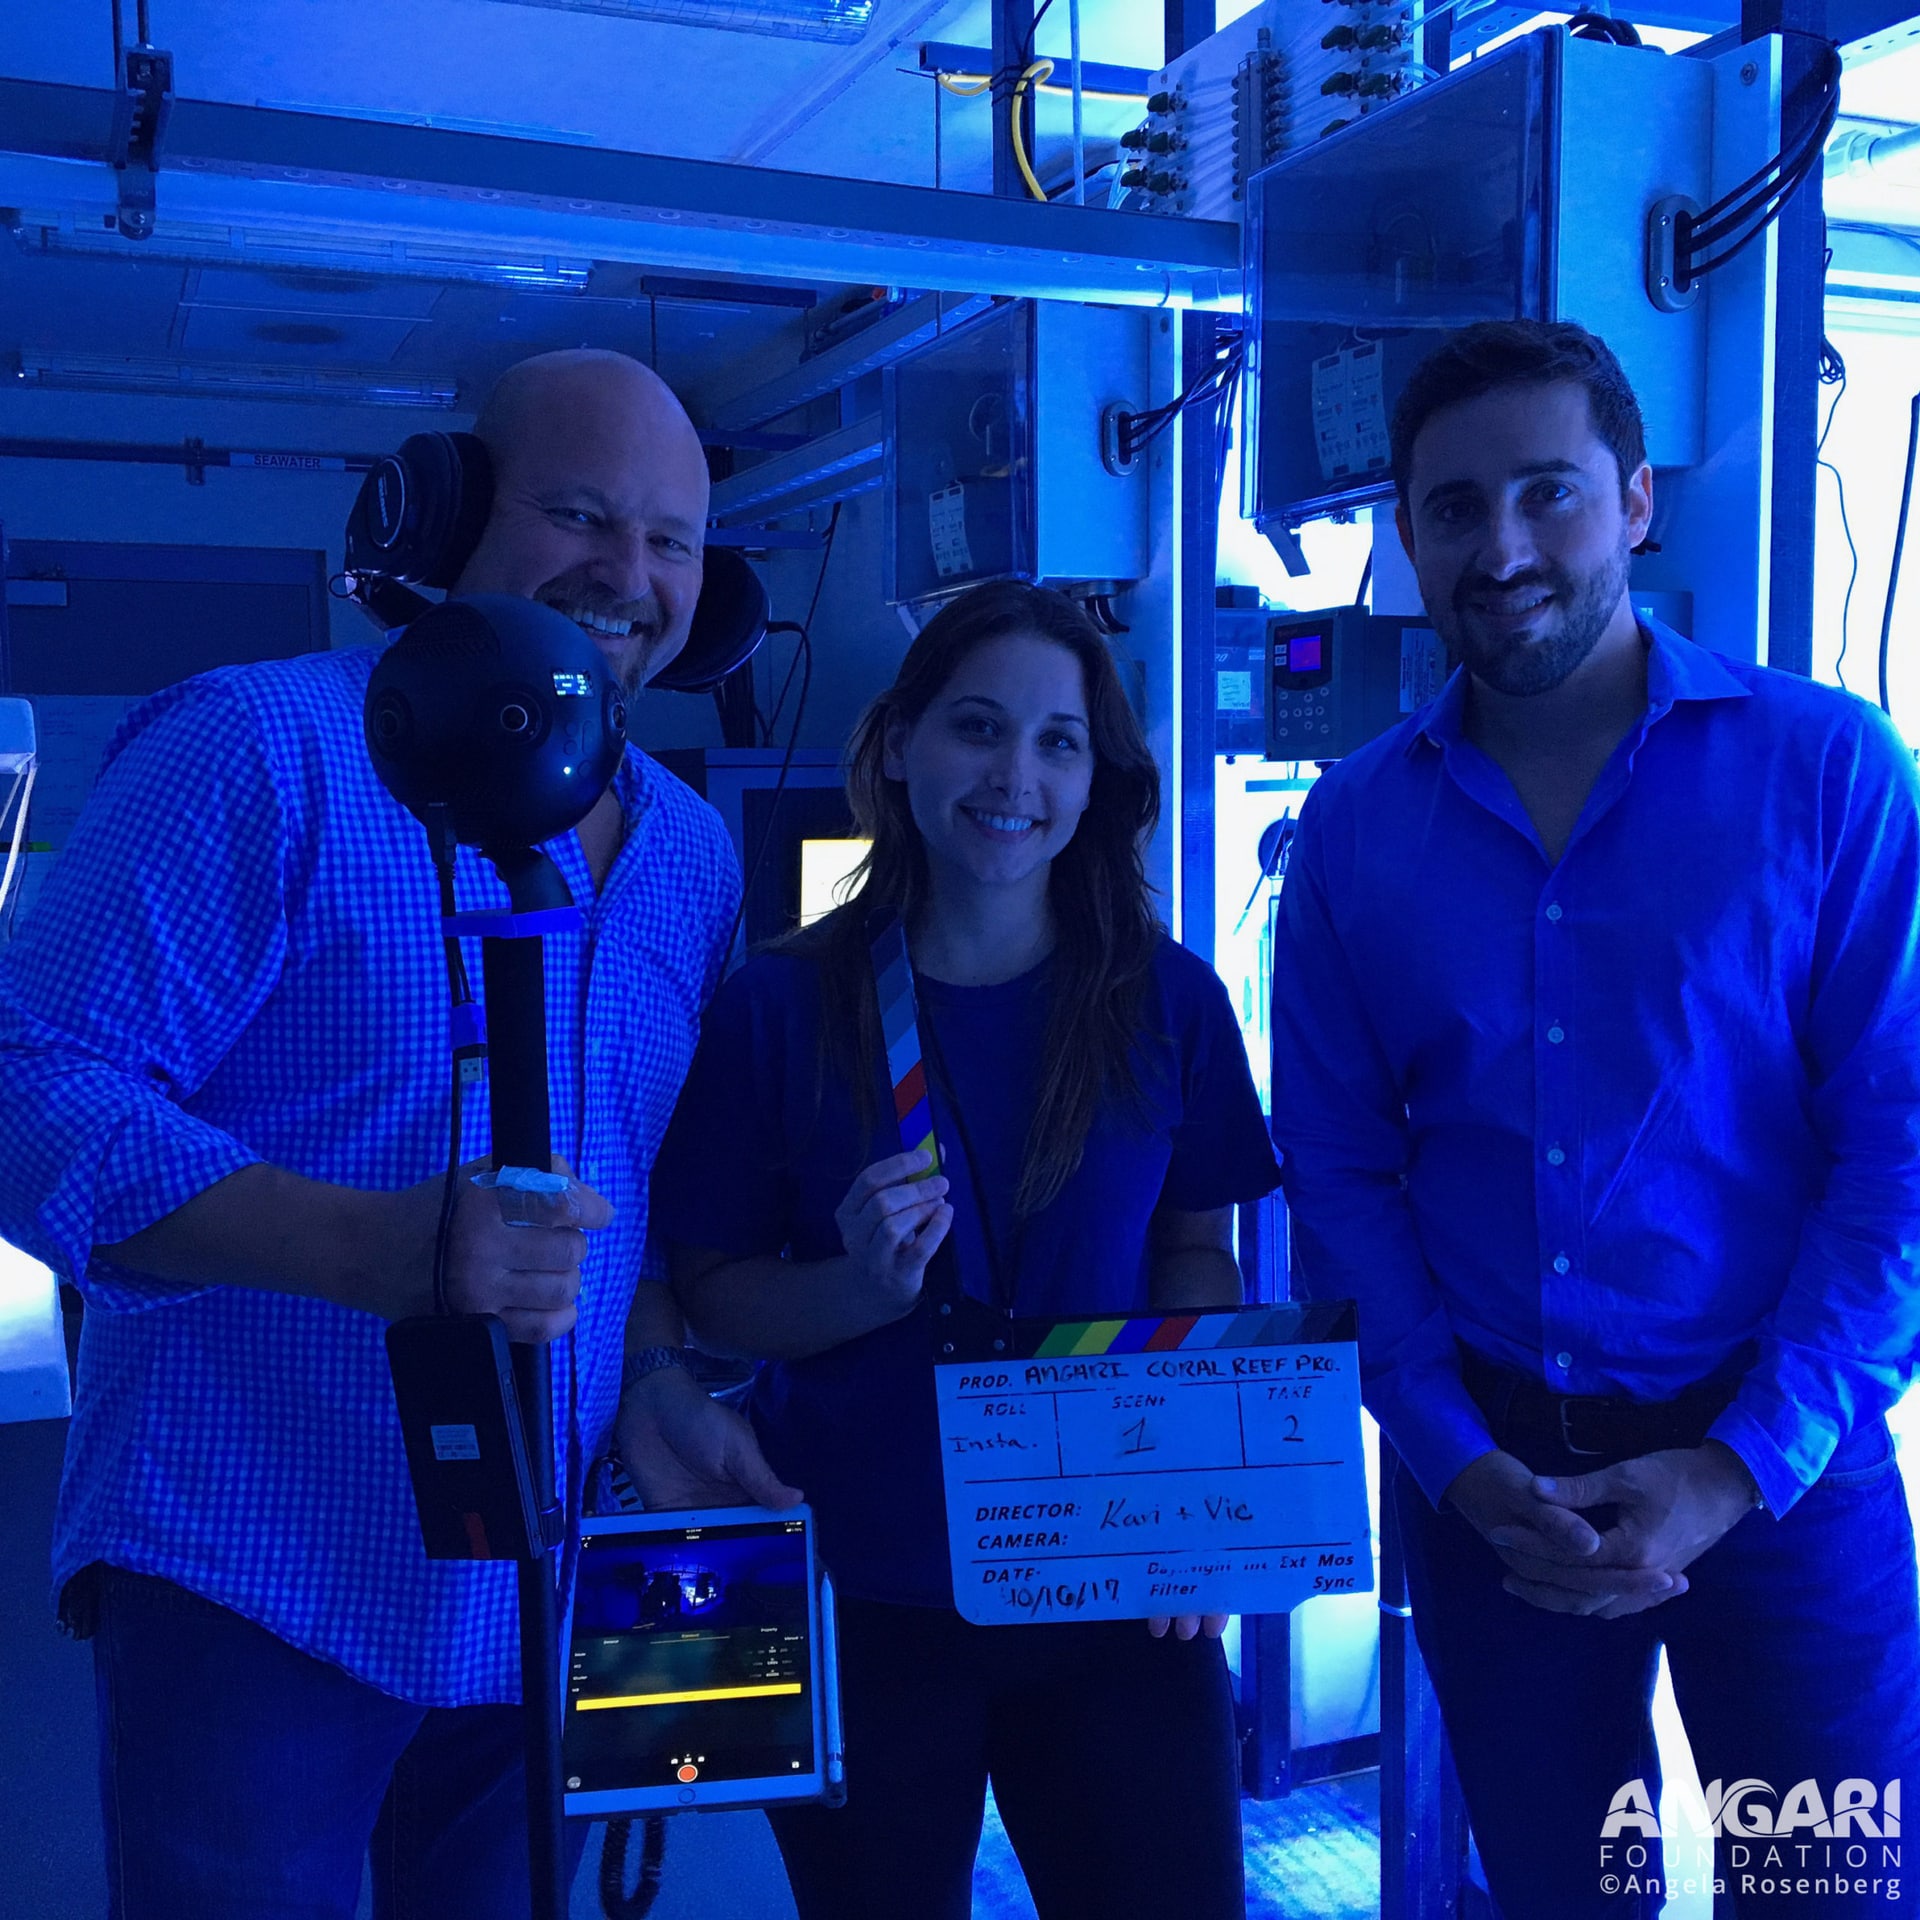 ANGARI 360 VR film team visiting the Experimental Reef Laboratory. PC: Angela Rosenberg